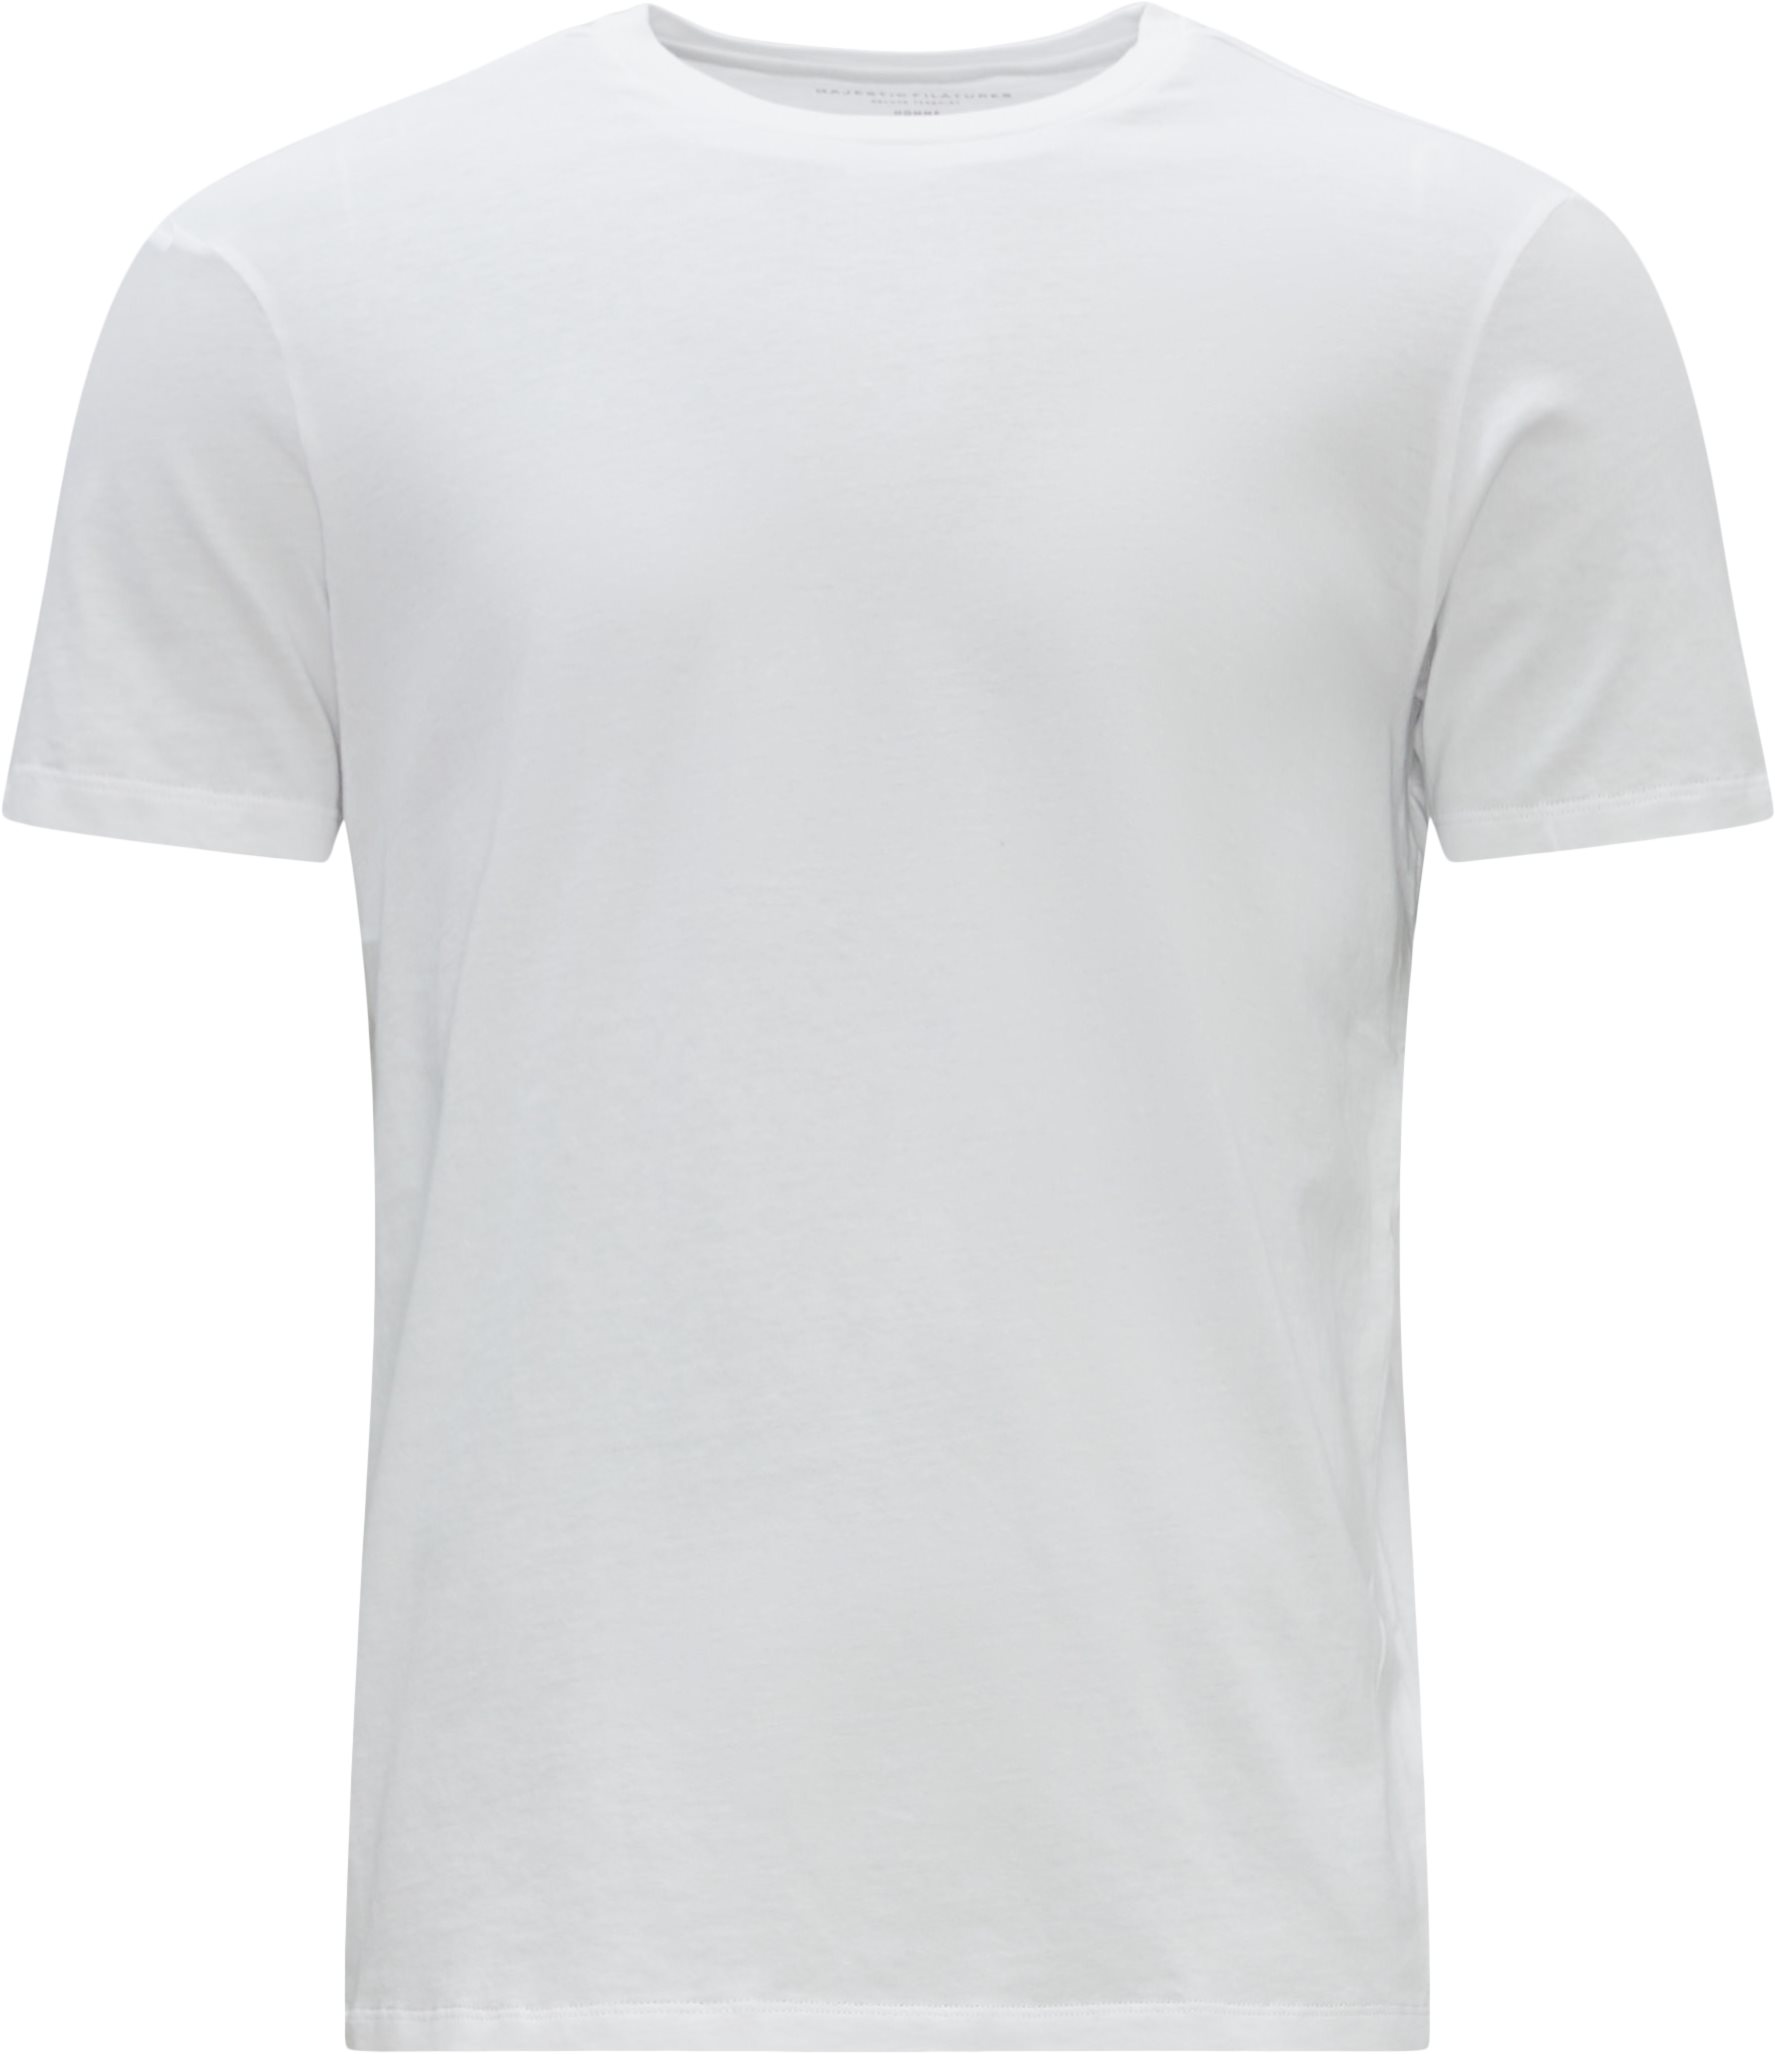 MAJESTIC FILATURES T-shirts PATRICE - M537 HTS022 White